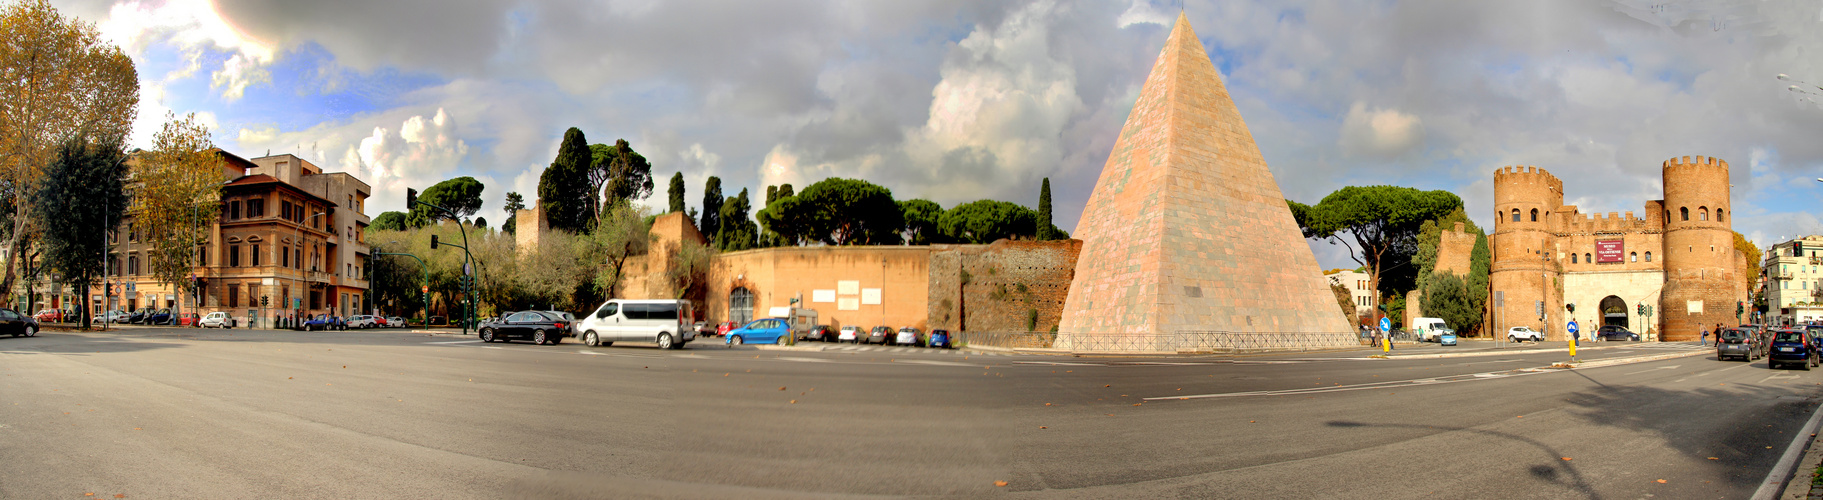 CITYSCAPE & Pyramid of Caius Cestius in ROME 